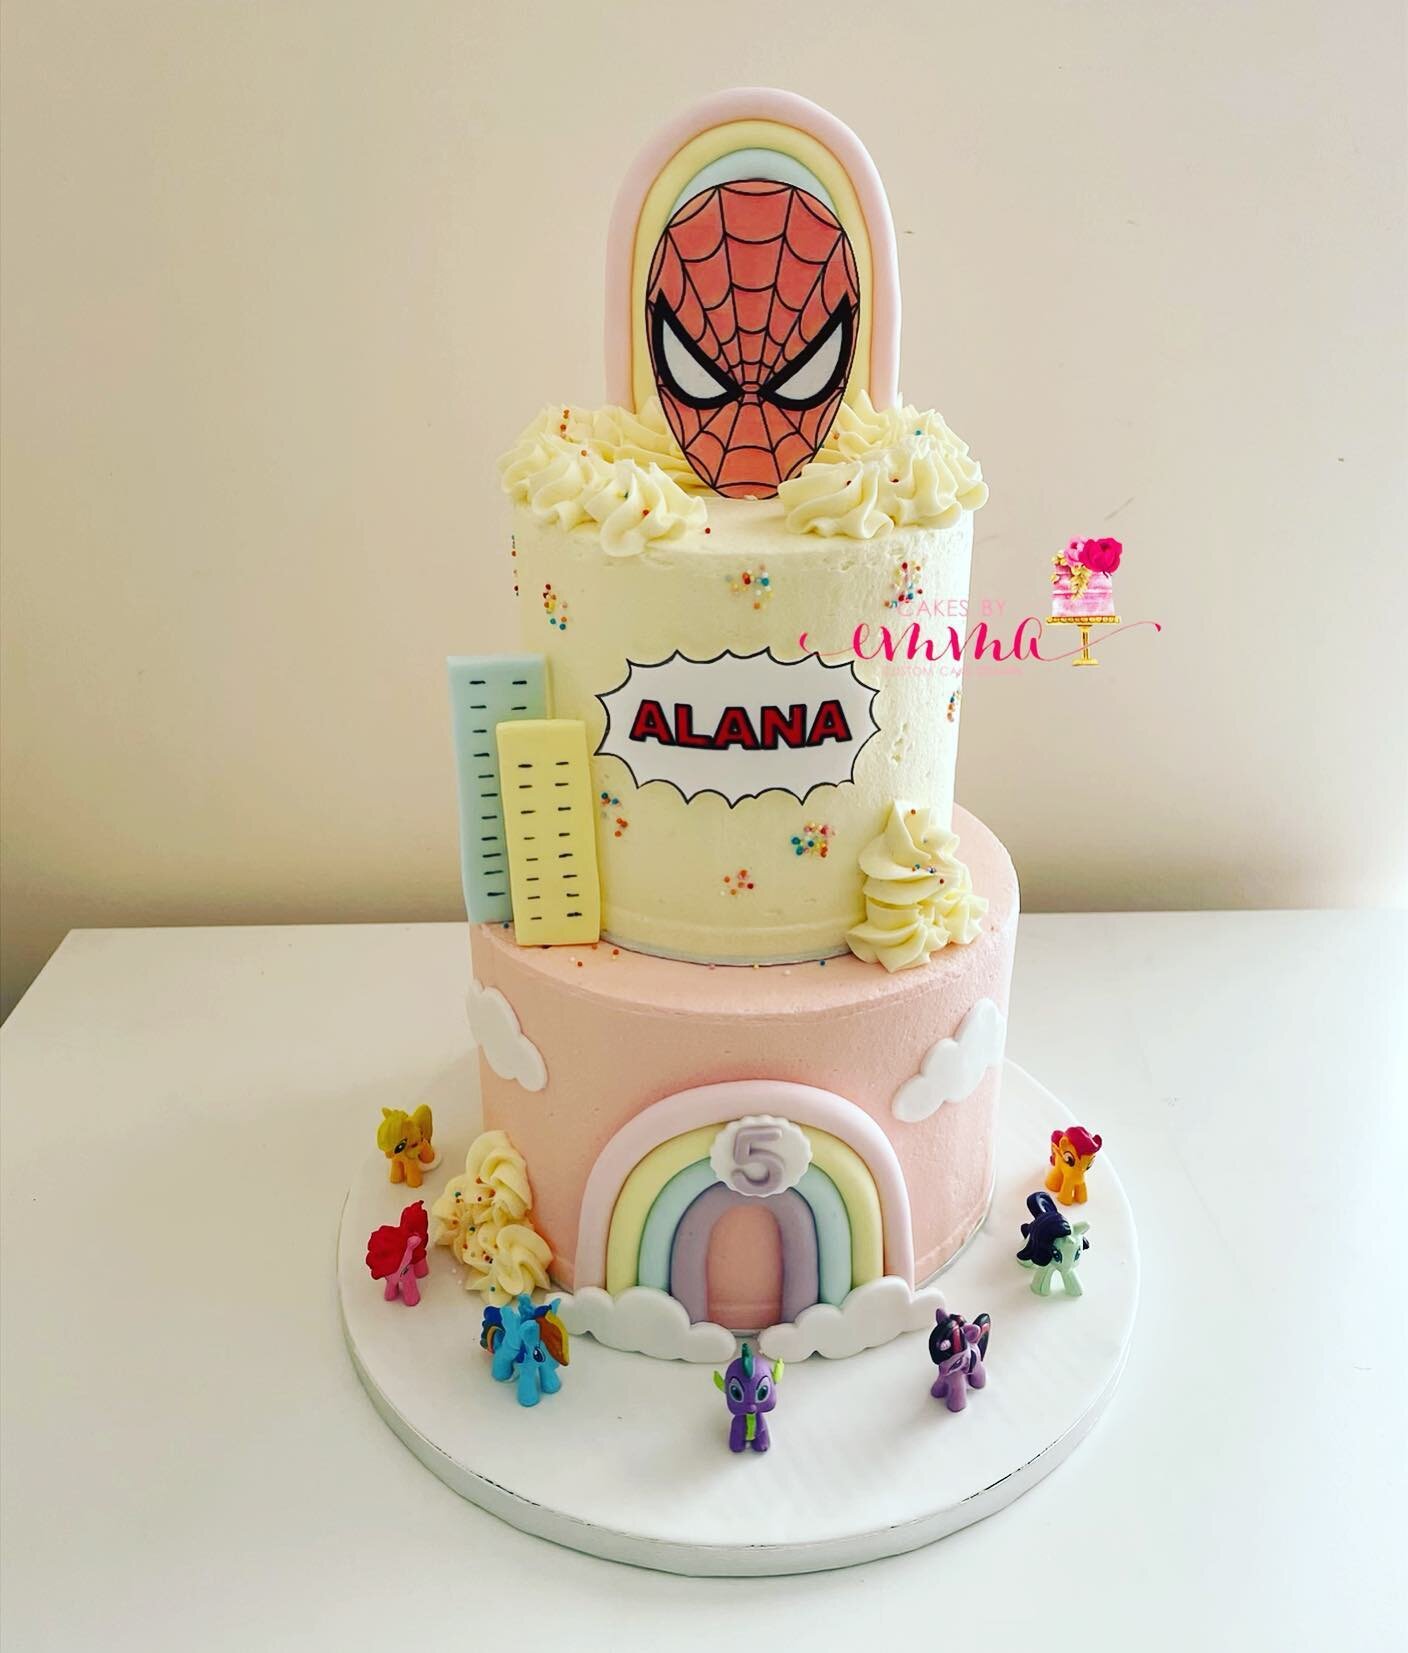 #spidermancake #mylittleponycake #birthday #cake #birthdaycake #cakesofinstagram #buttercreamcake #prestwoodcakes #greatmissendencakes #highwycombecakes #buckscakes